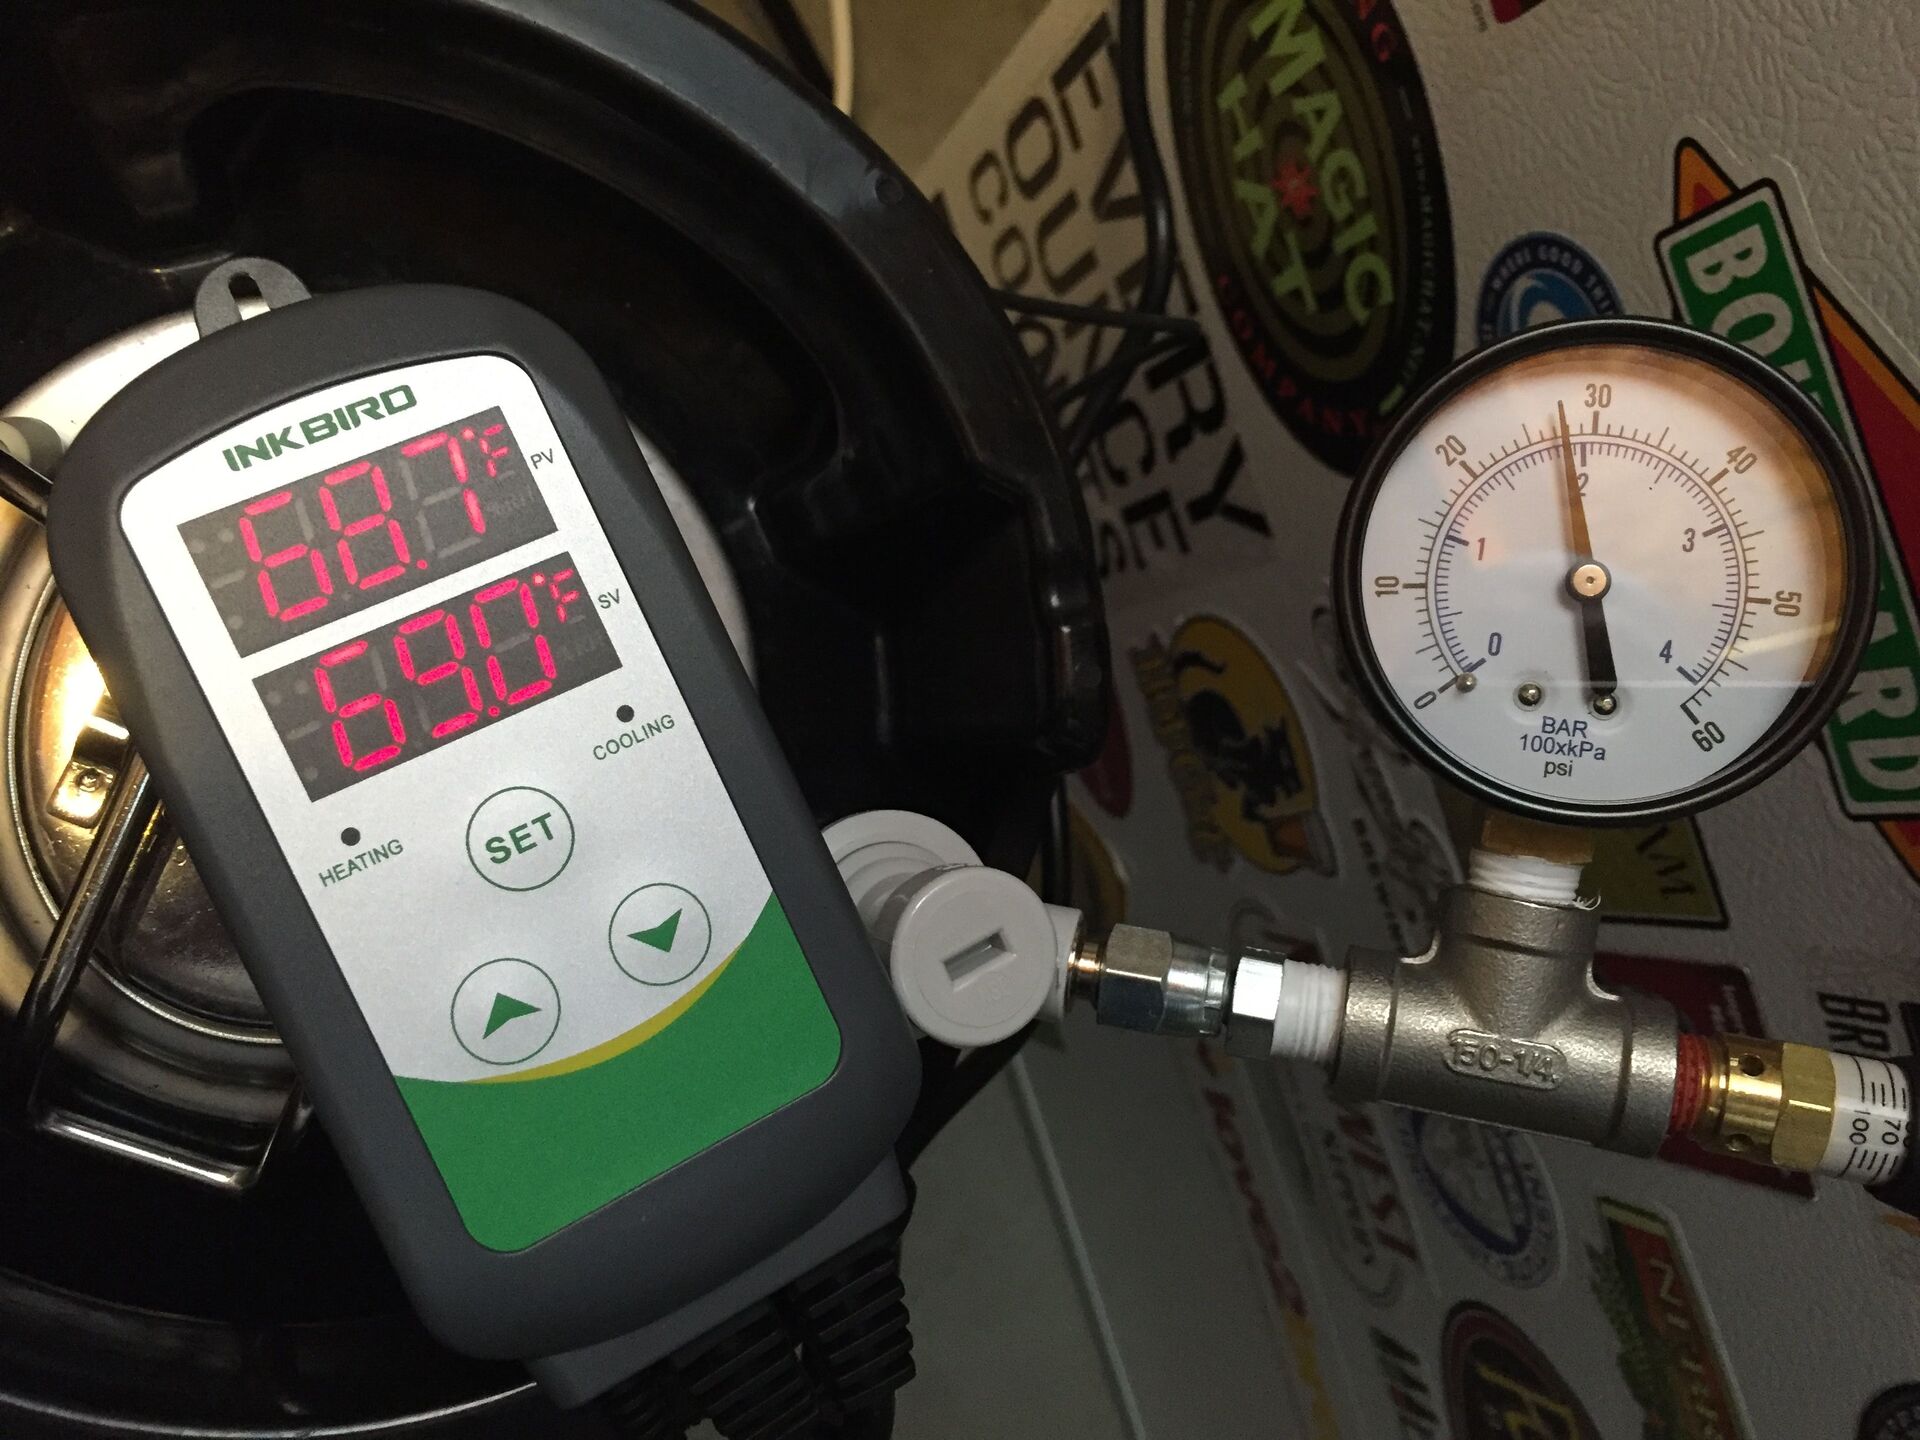 Replacing the Temperature Probe on the Inkbird itc-306 / itc-308